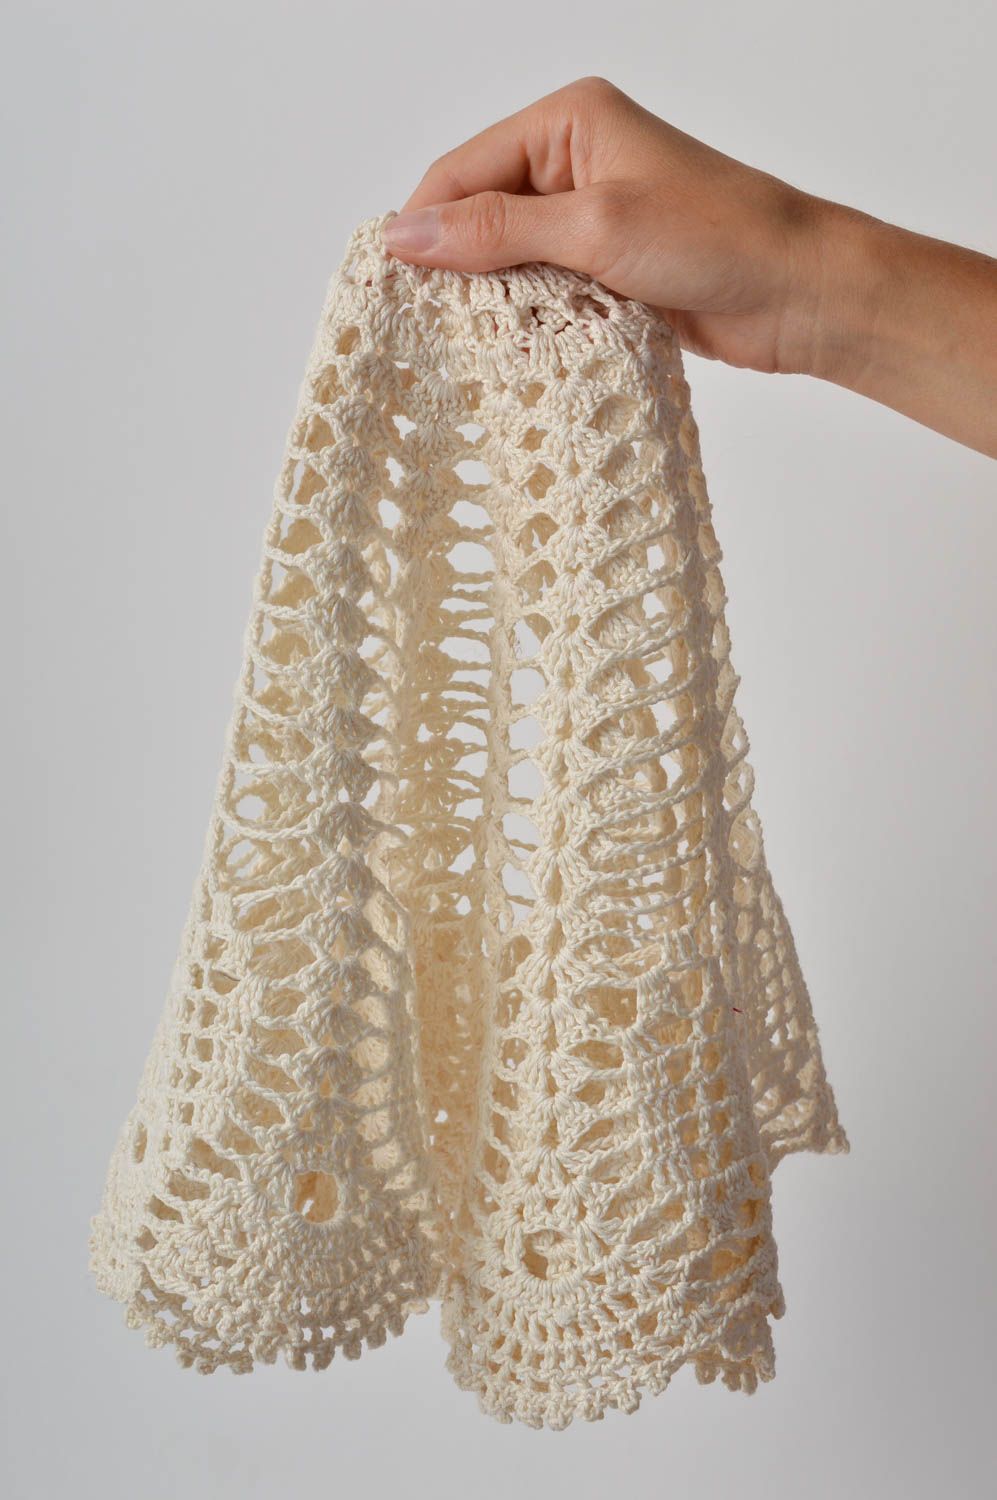 Handmade openwork napkin round crocheted napkin unusual decor ideas lace napkin  photo 4